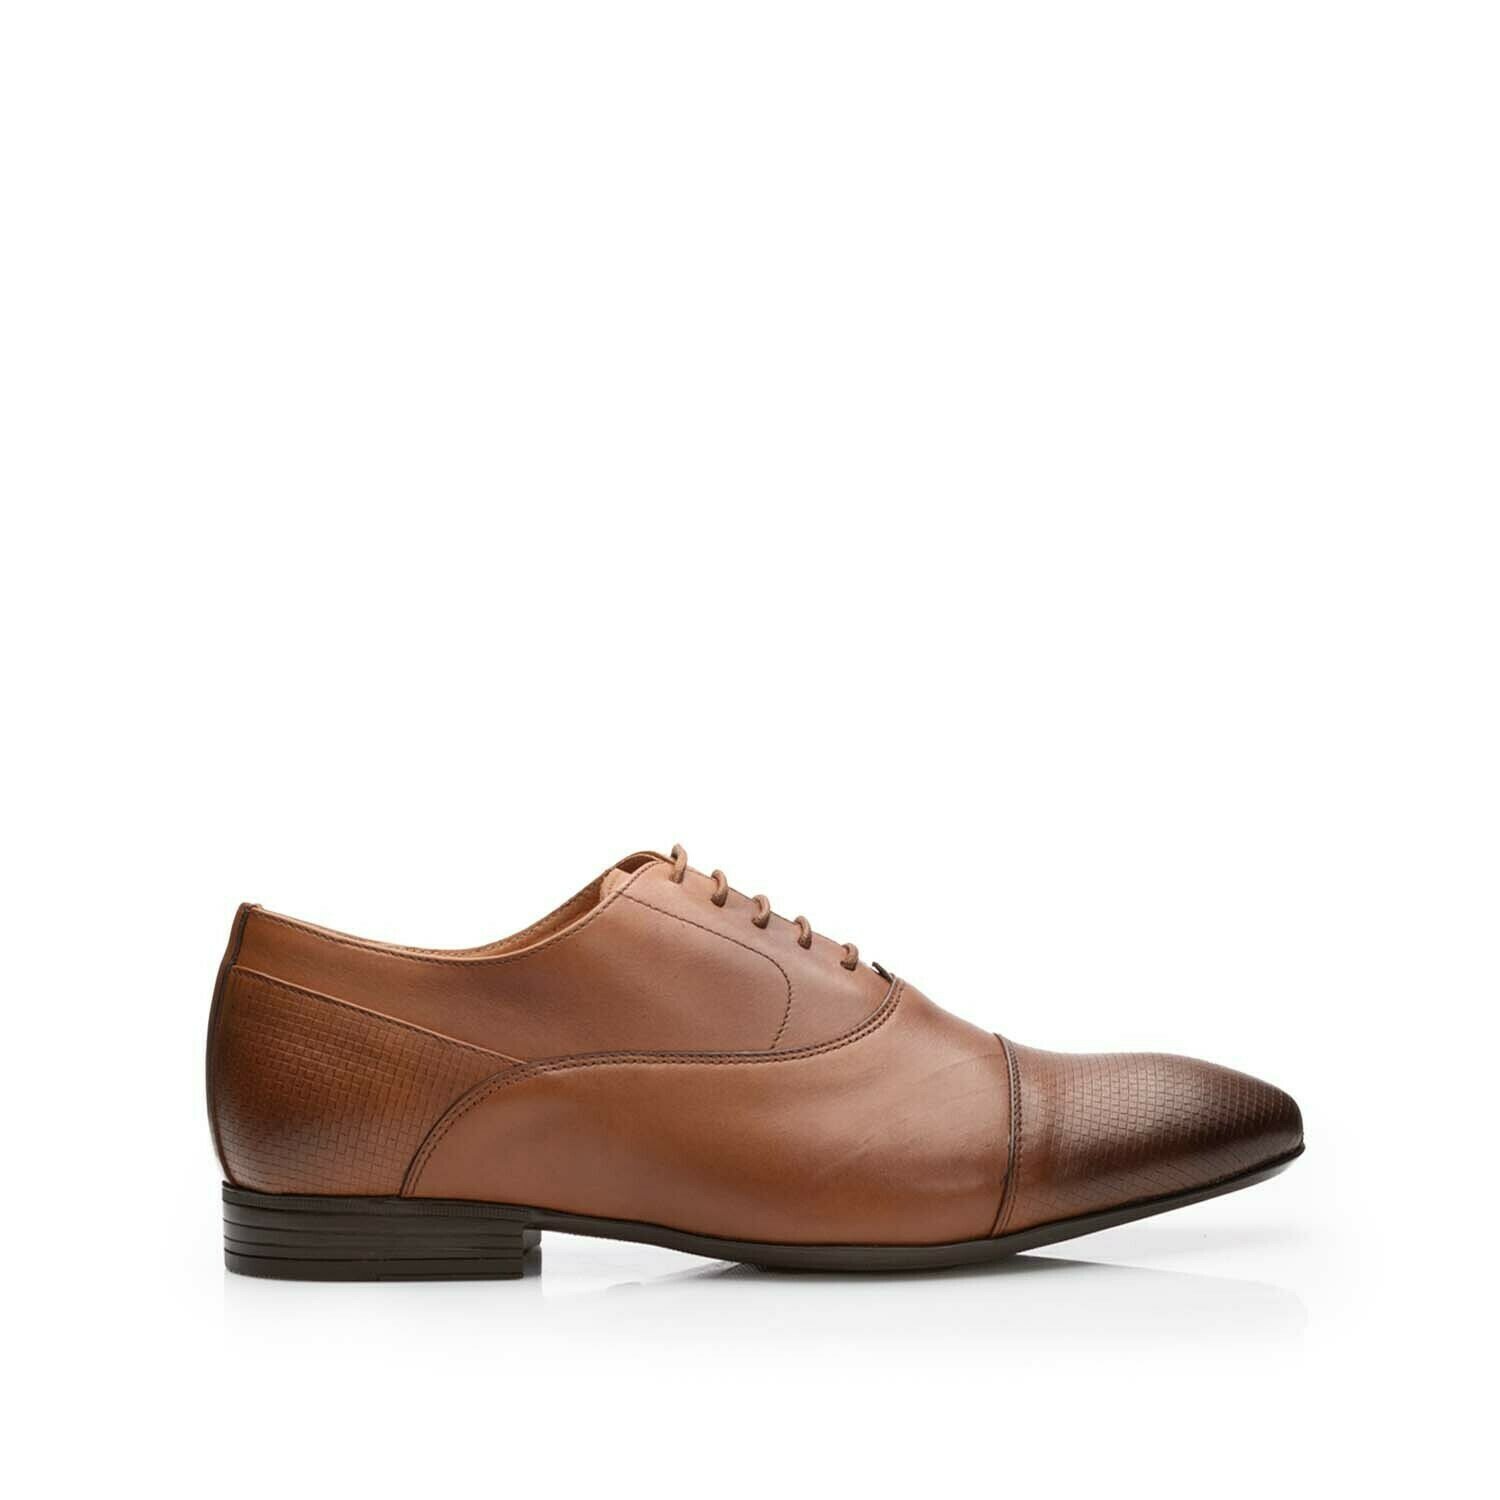 Pantofi eleganti barbati din piele naturala, Leofex - 834 Cognac box